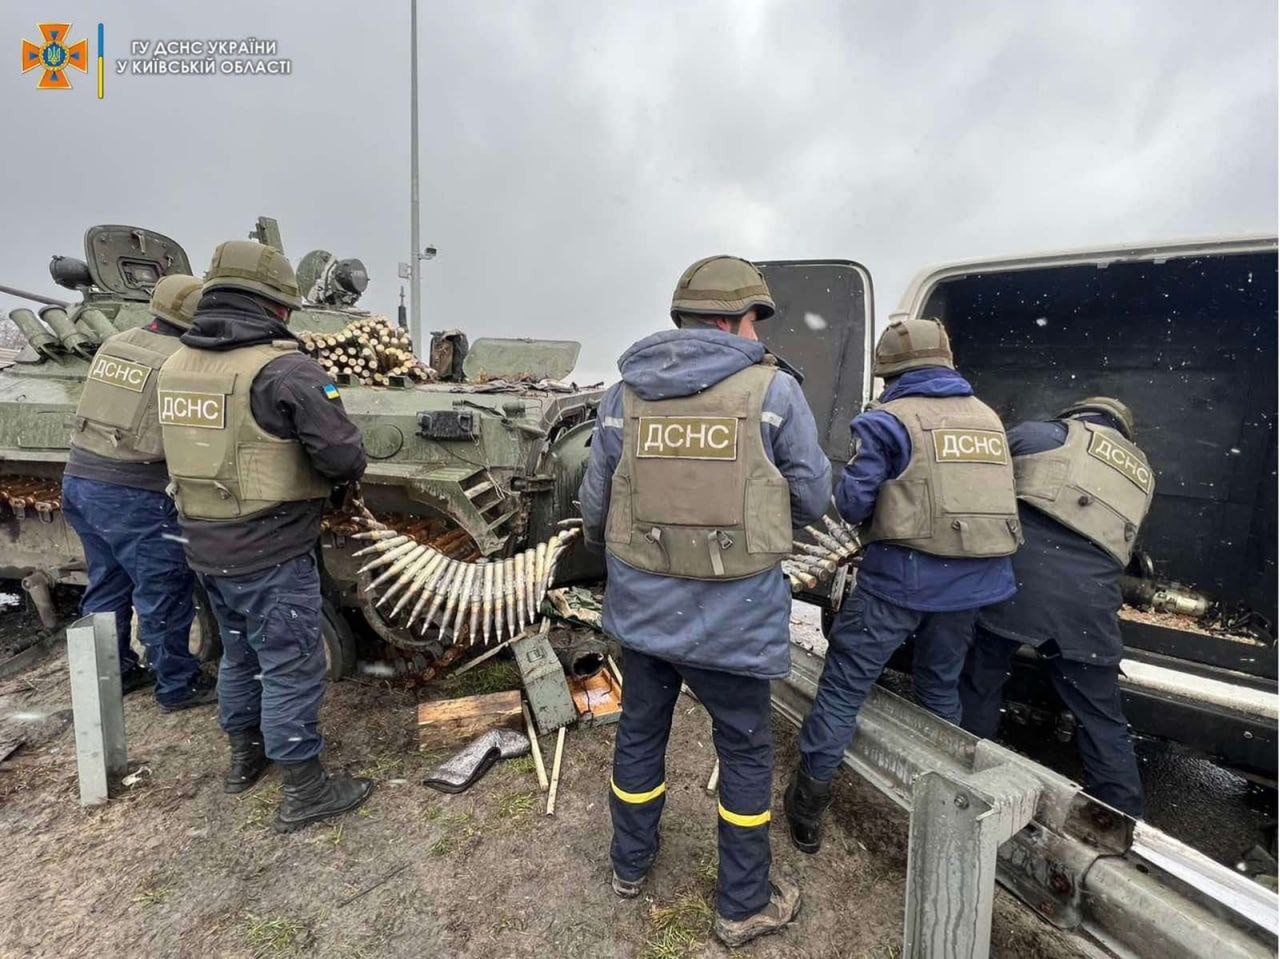 "Dary" armii Putina. Ukraina pokazuje zdjęcia